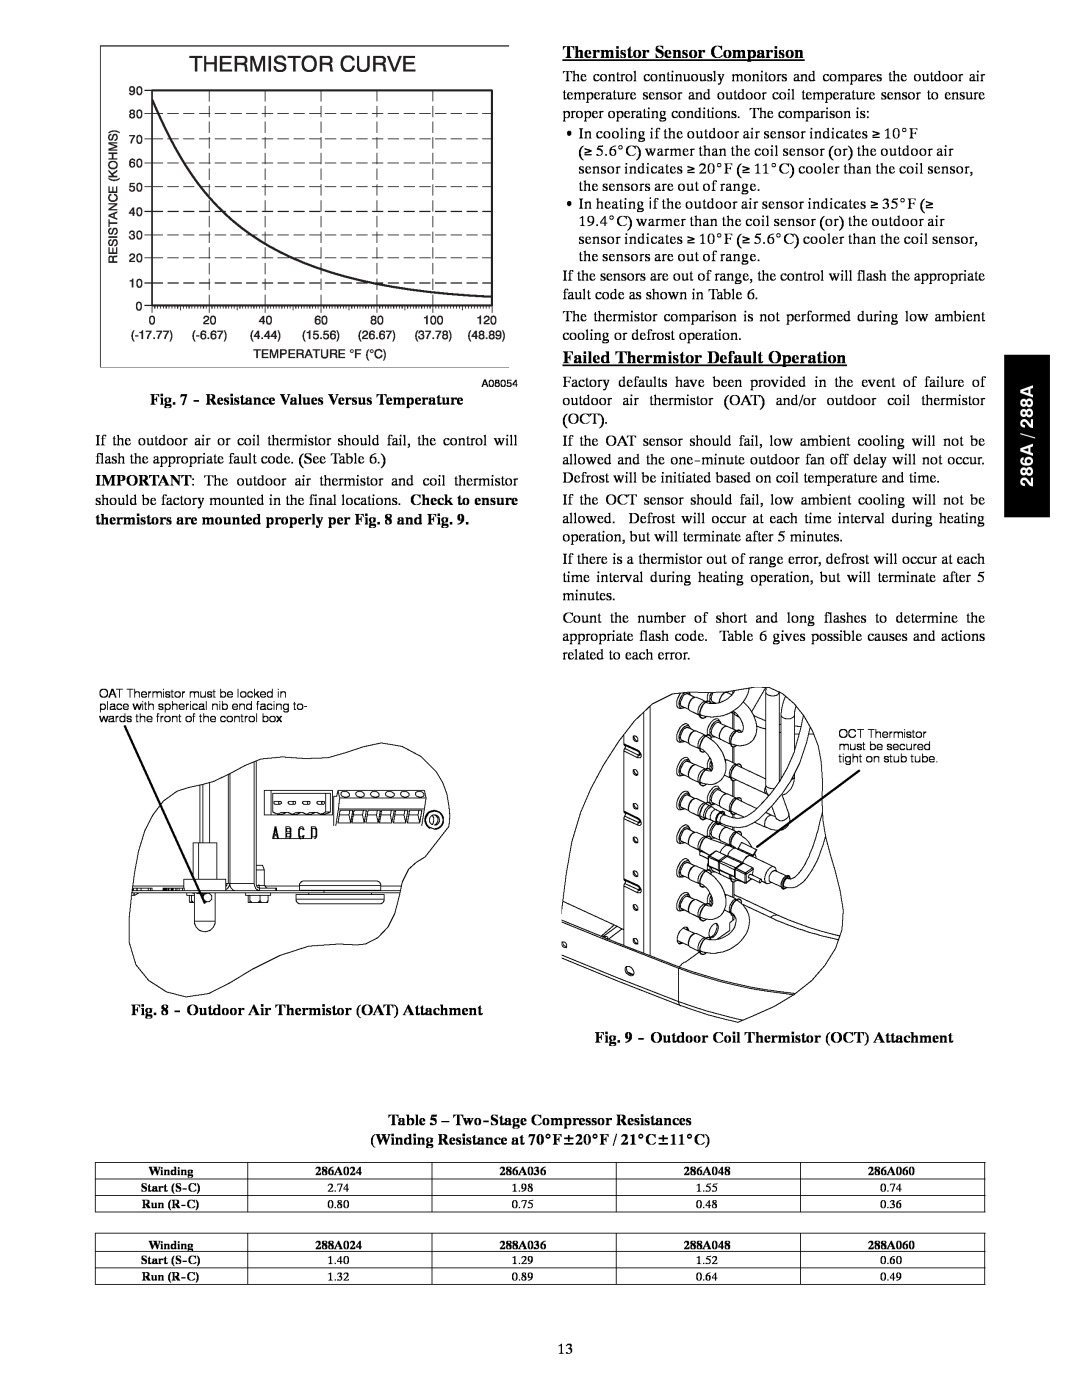 Bryant 286A Thermistor Sensor Comparison, Failed Thermistor Default Operation, Resistance Values Versus Temperature 